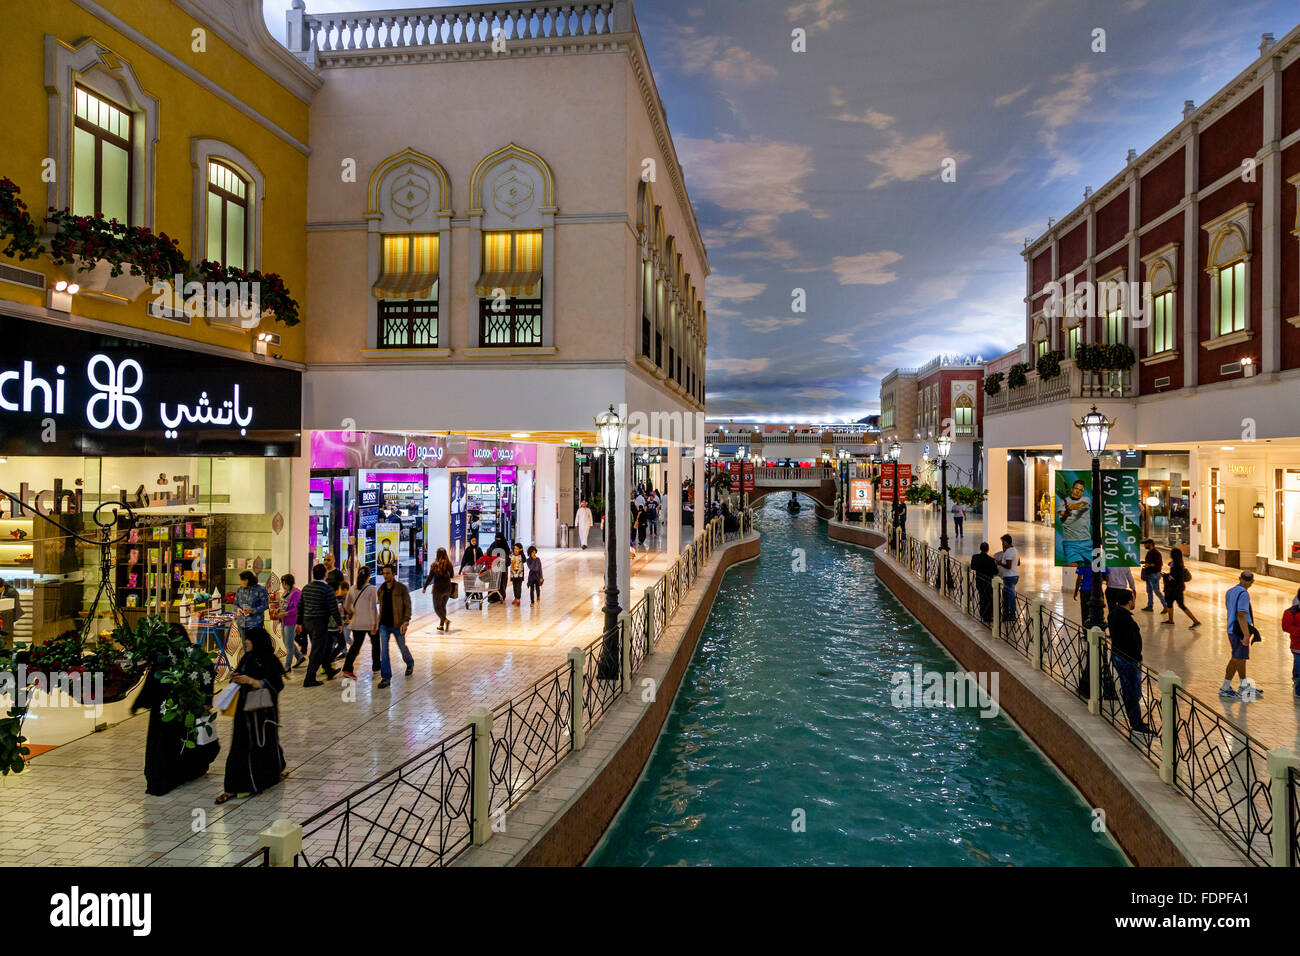 Villaggio Mall Qatar